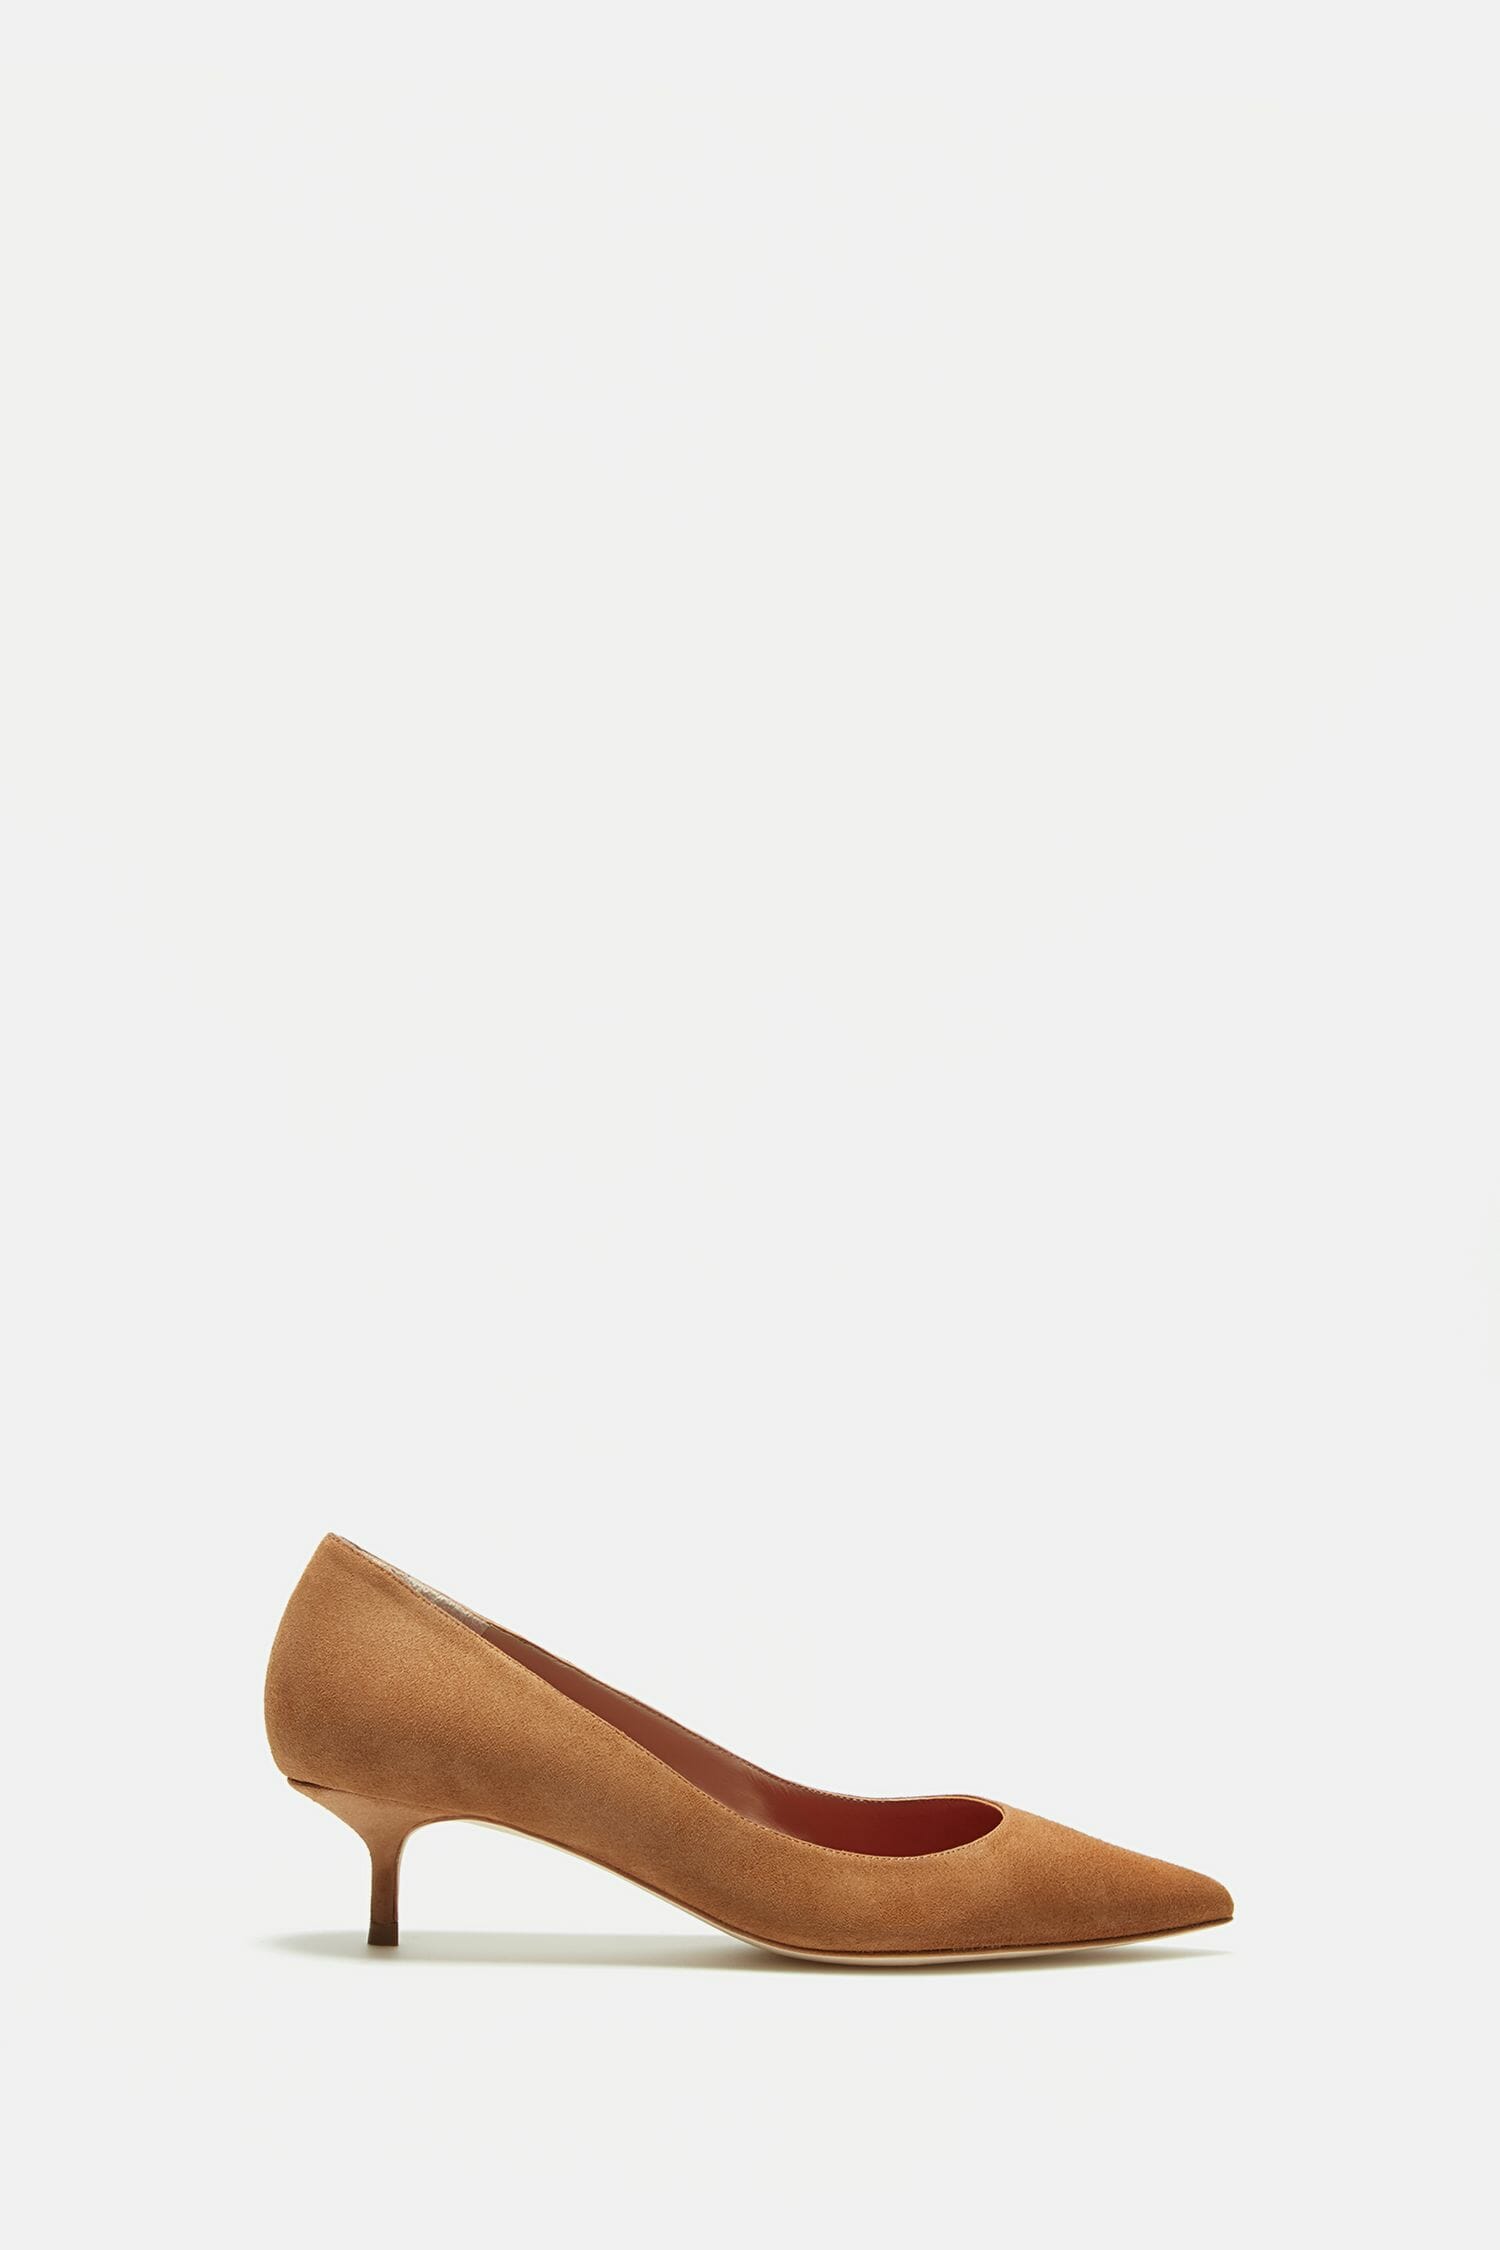 Shoe 26 | Carolina Herrera